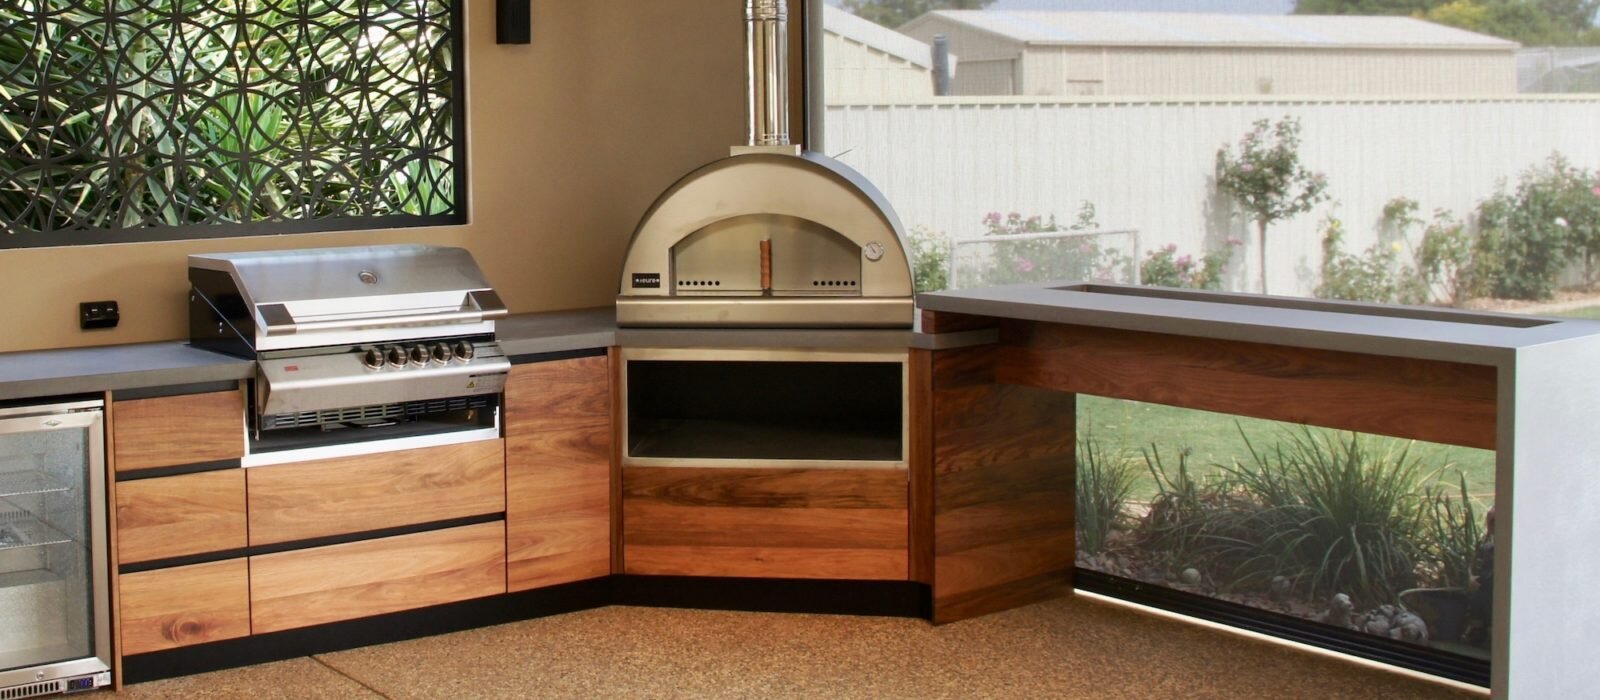 Adelaide Outdoor Kitchens   Kitchens · Concrete Benchtops · Furniture